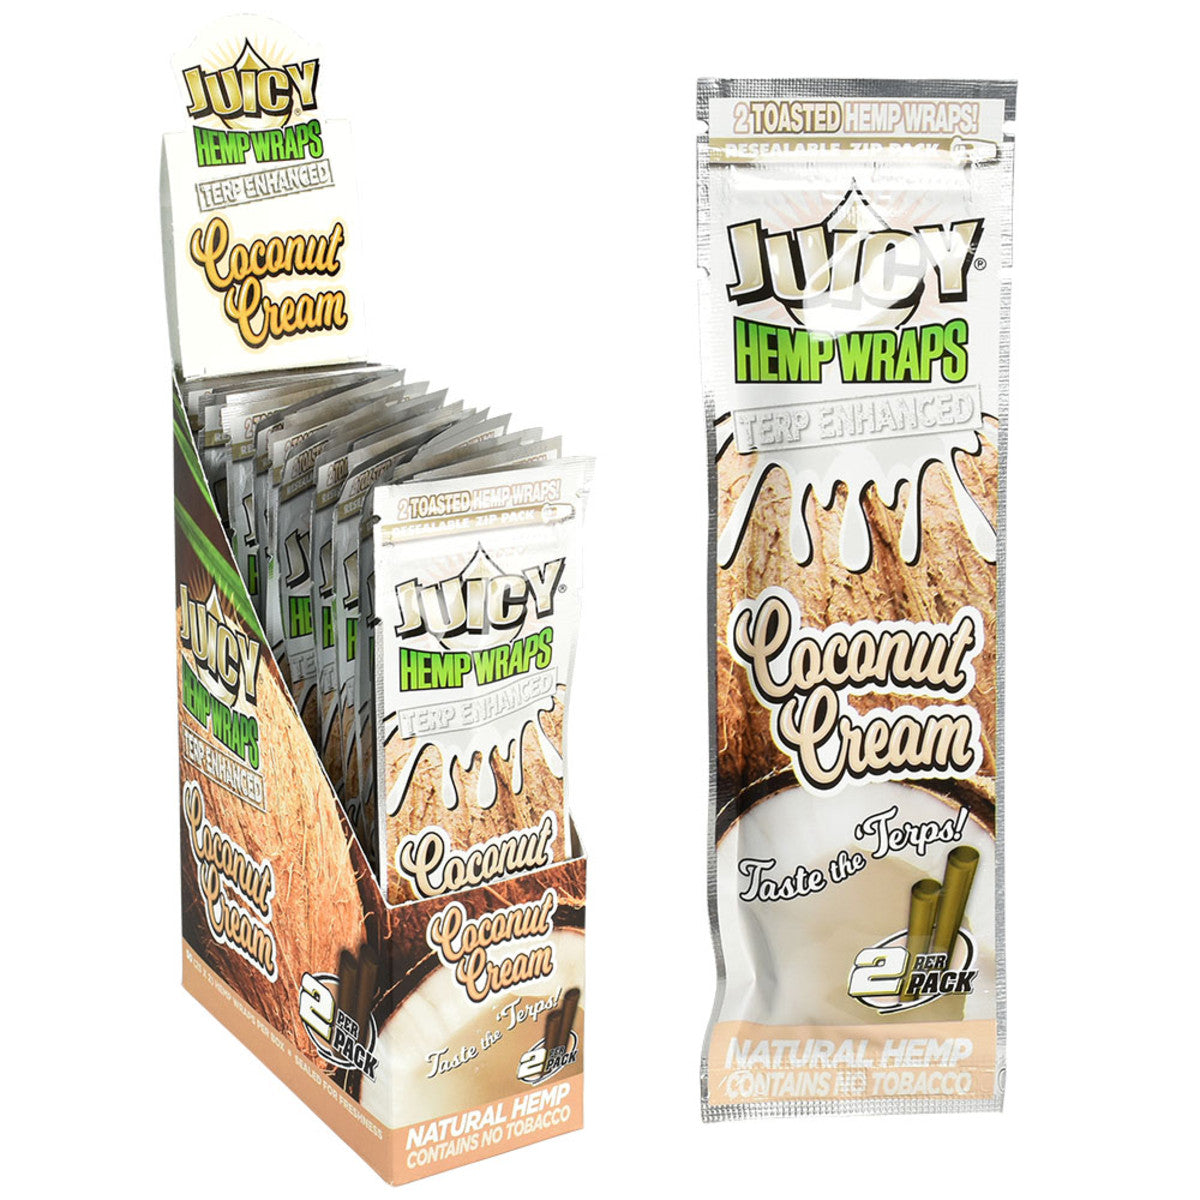 Juicy Terp Enhanced Hemp Wraps Coconut Cream Box